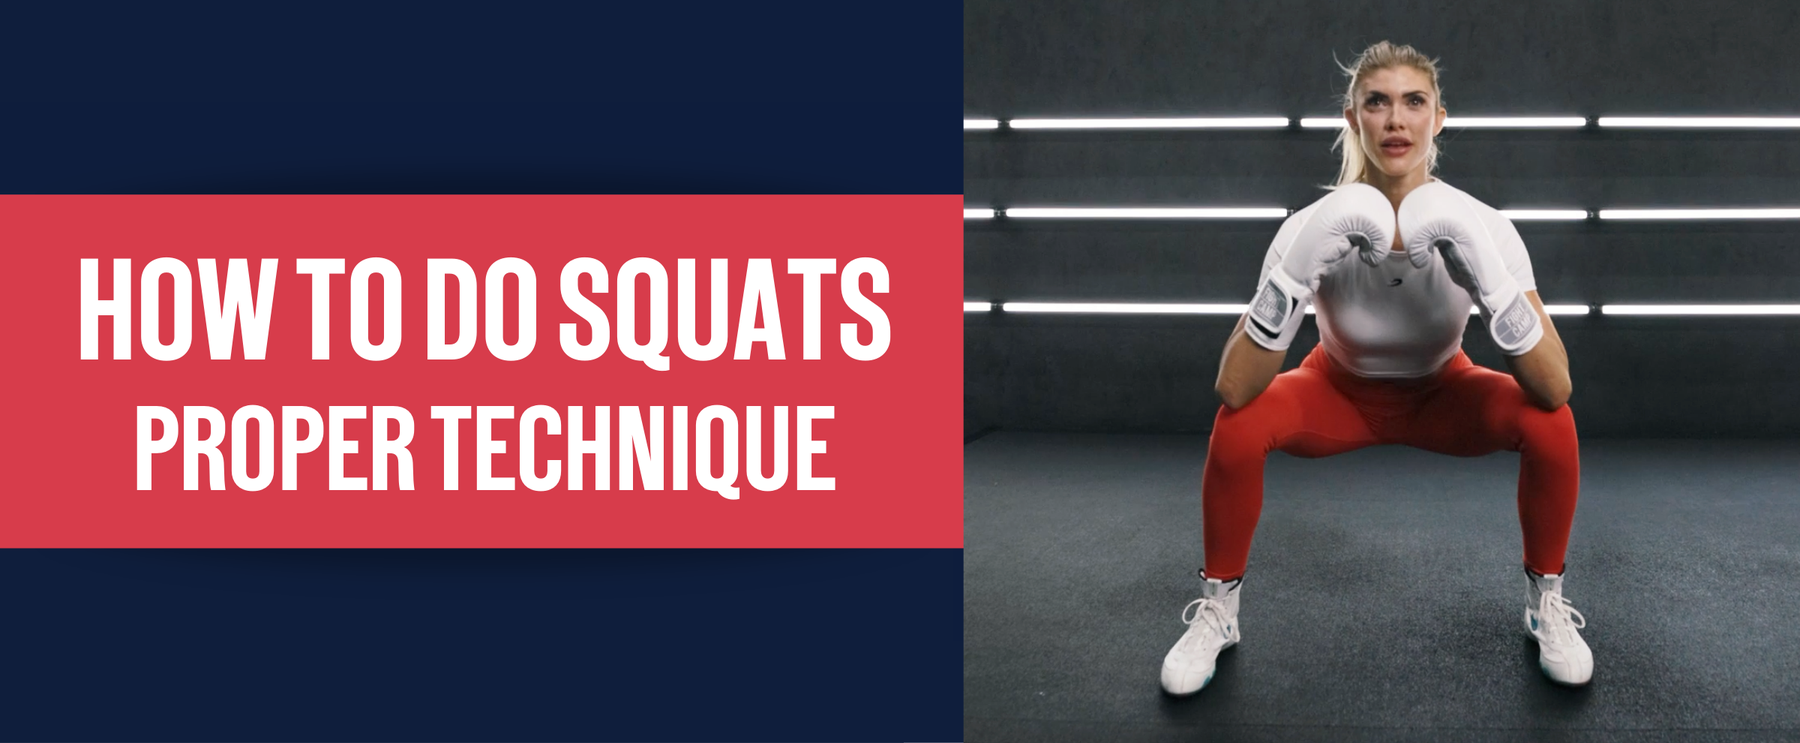 How To Do Squats | Proper Technique